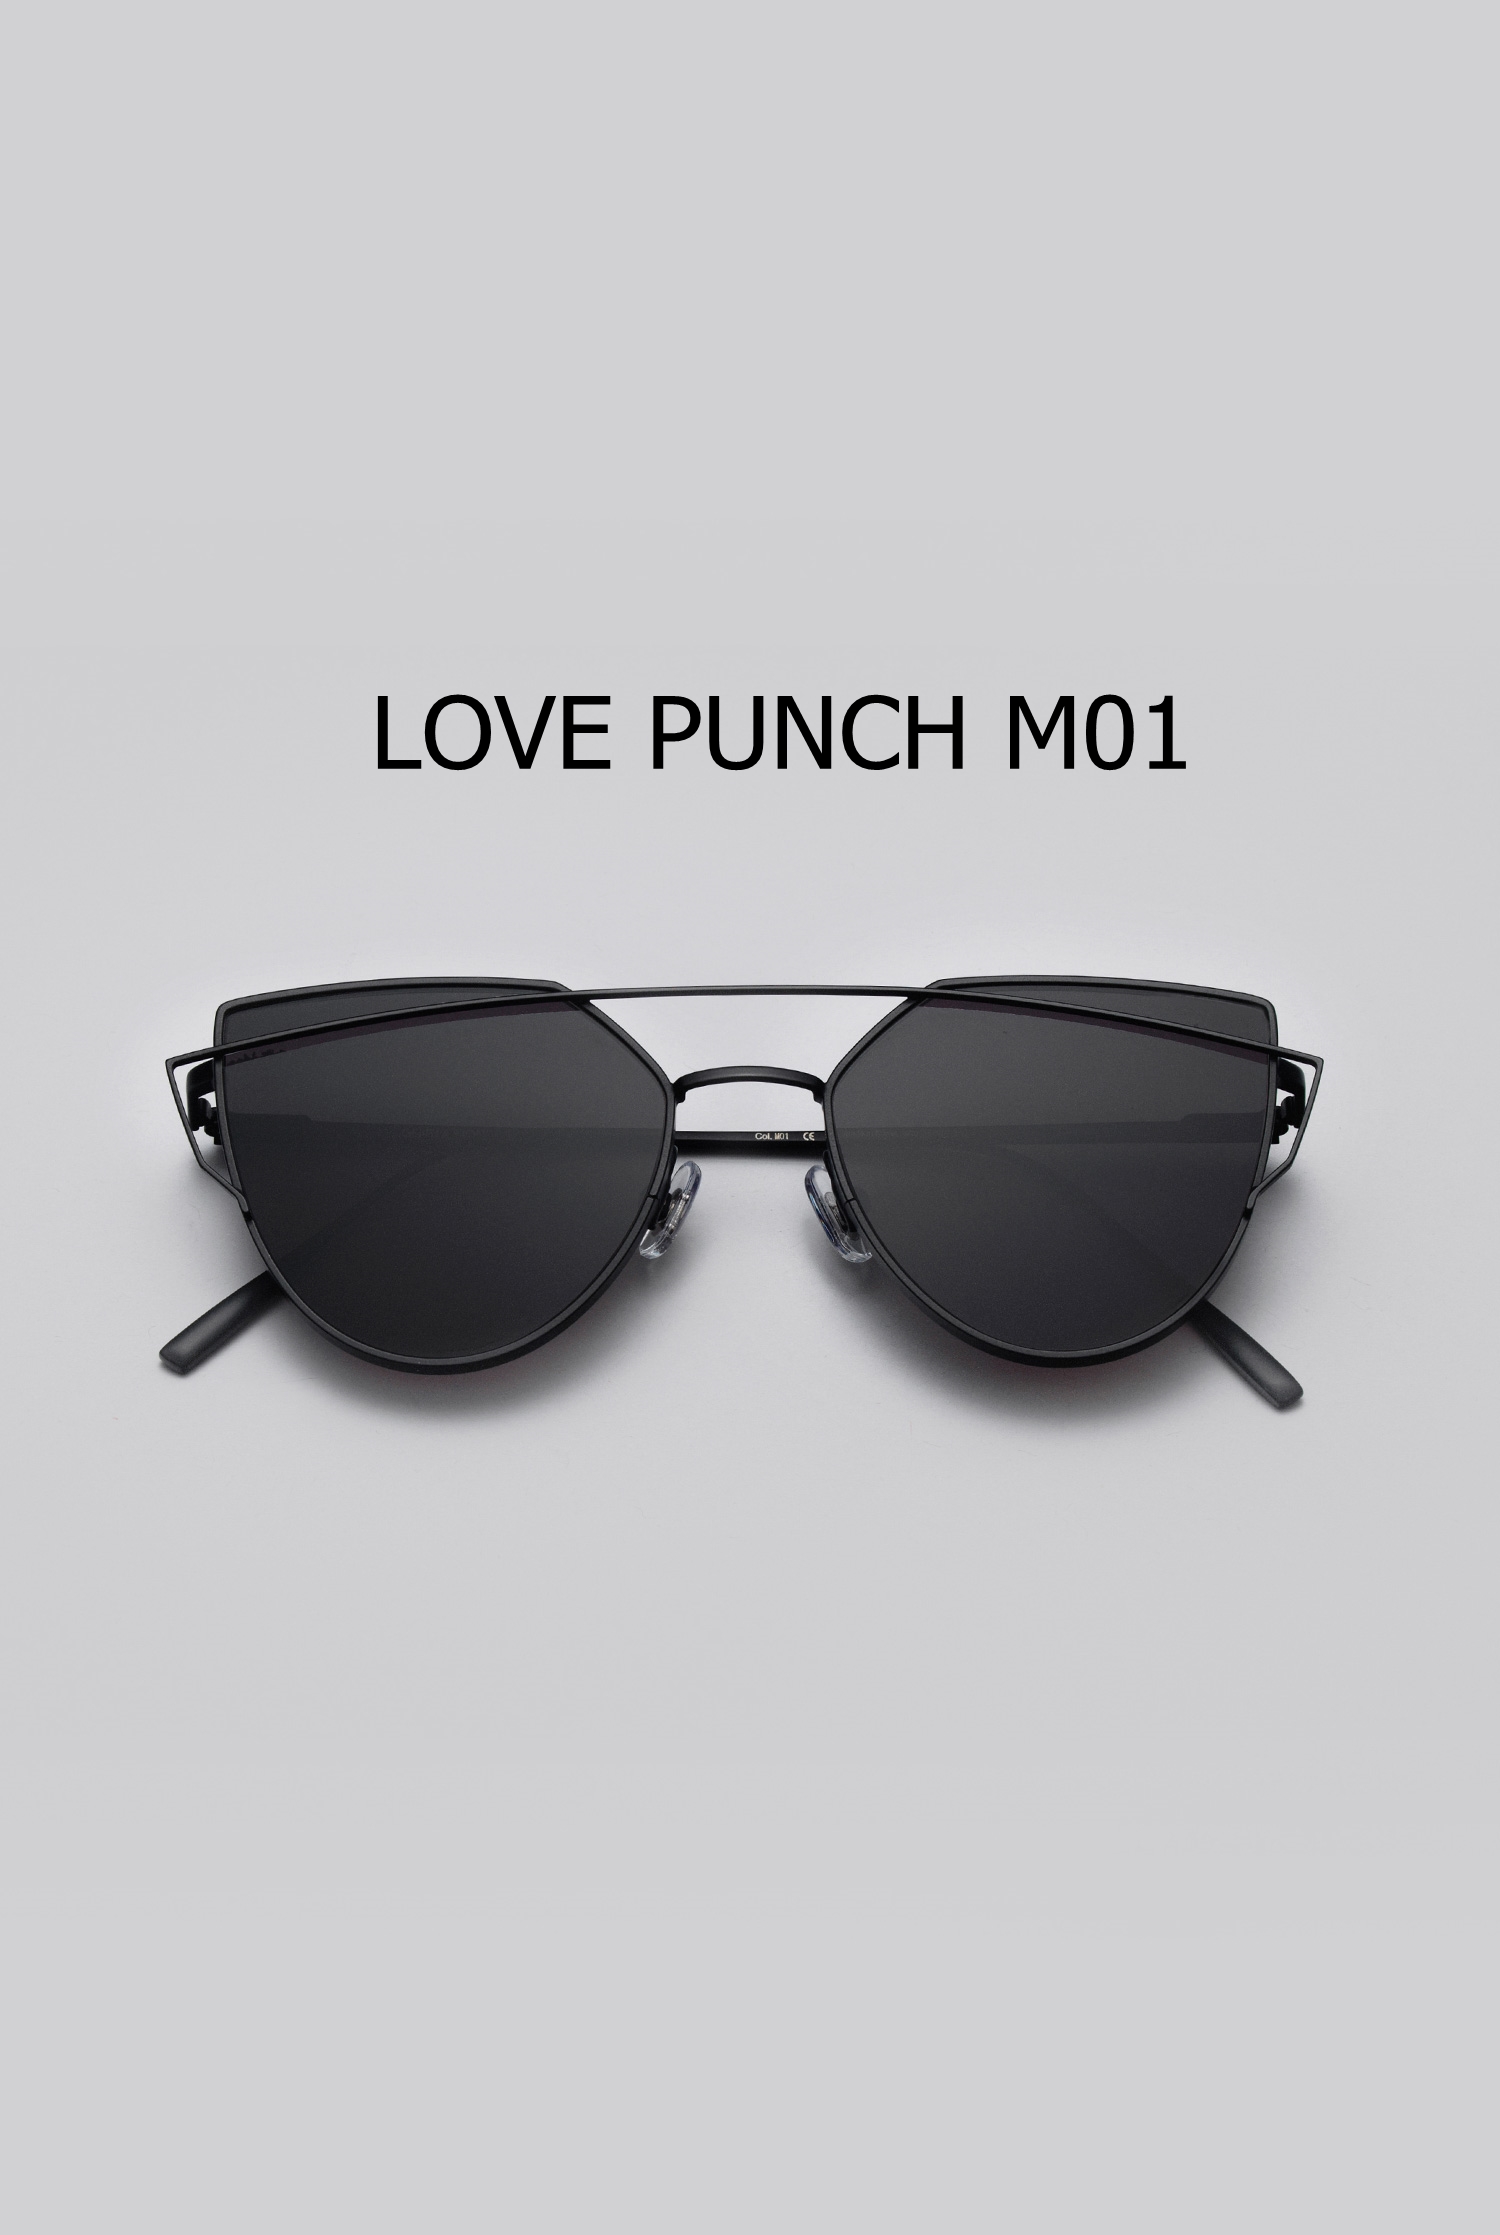 LOVE PUNCH M01